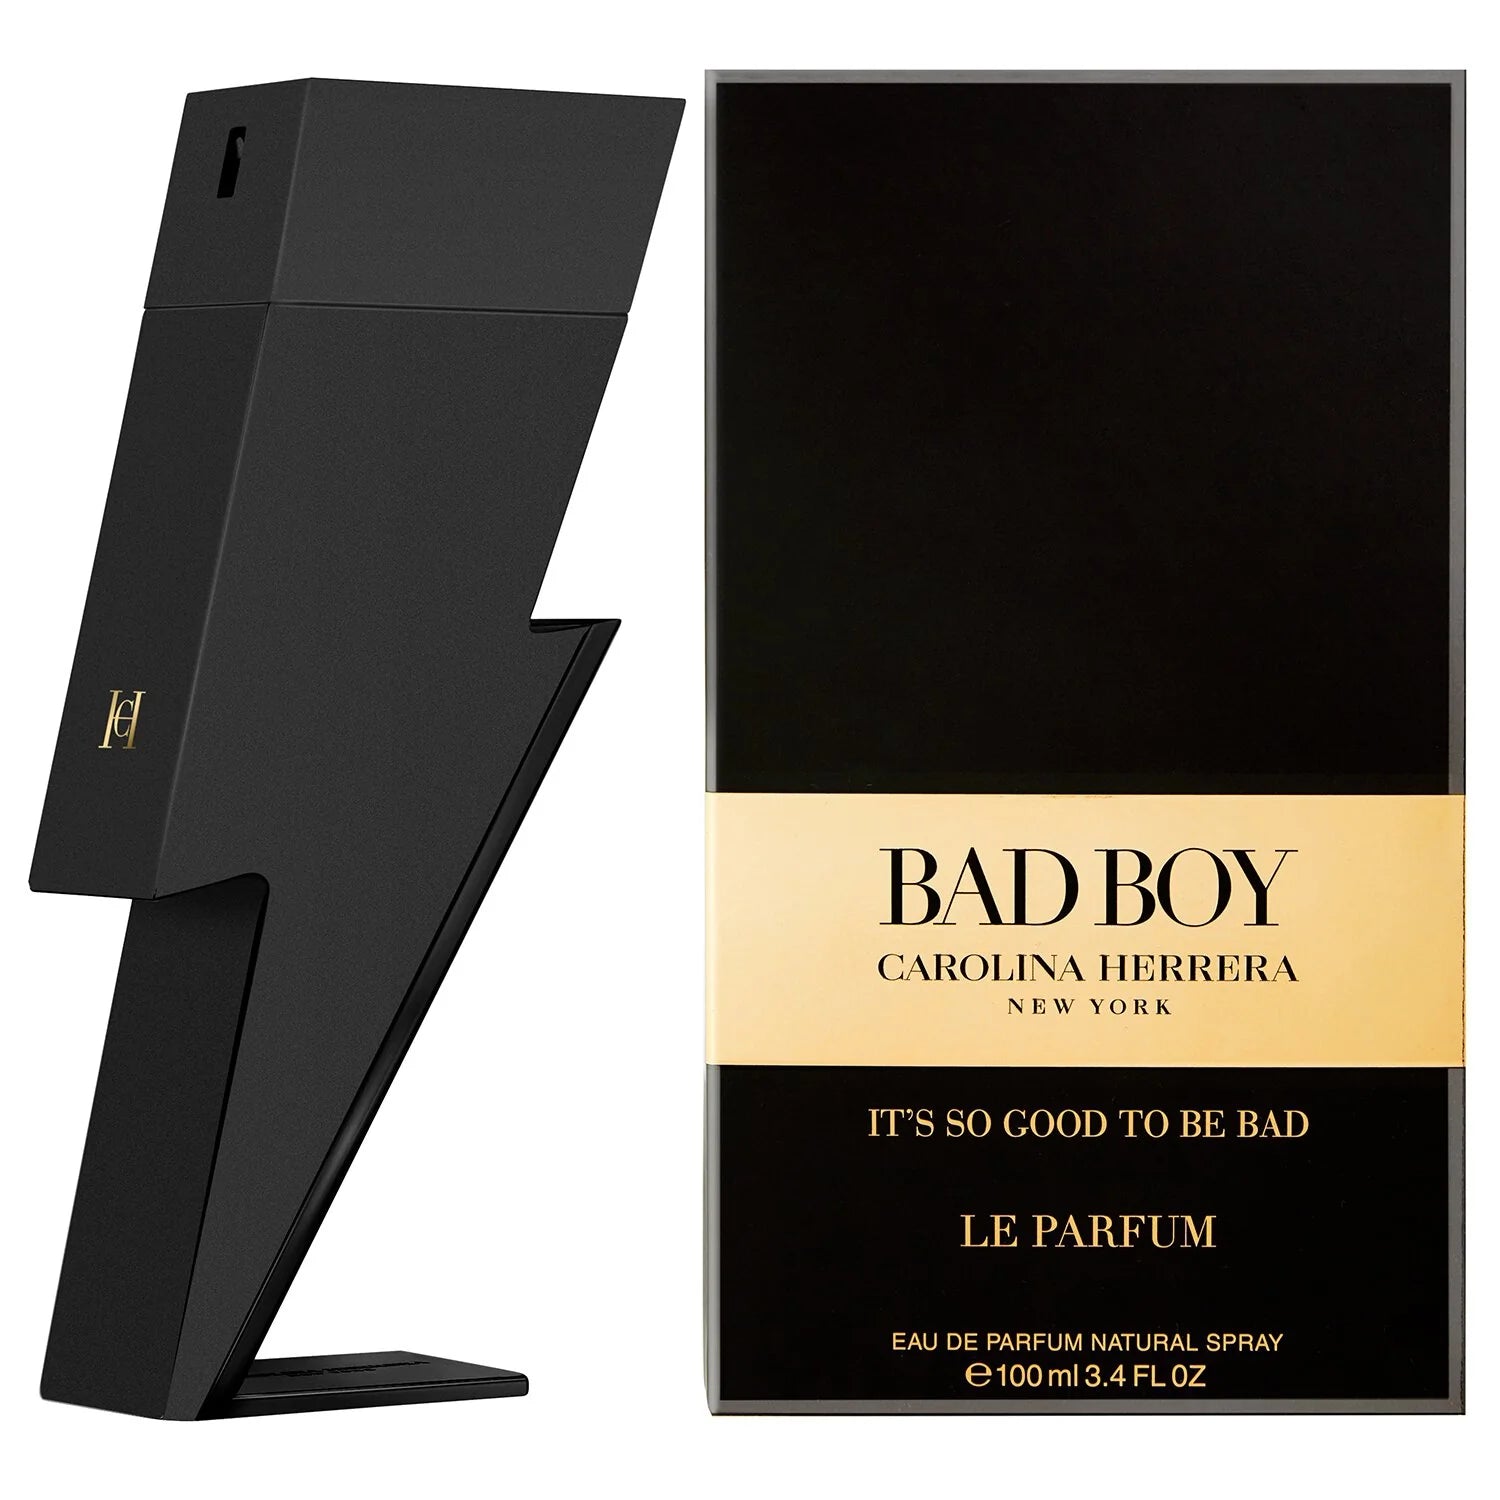 Bad Boy Le Parfum by Carolina Herrera 3.4 oz EDP Spray for Men